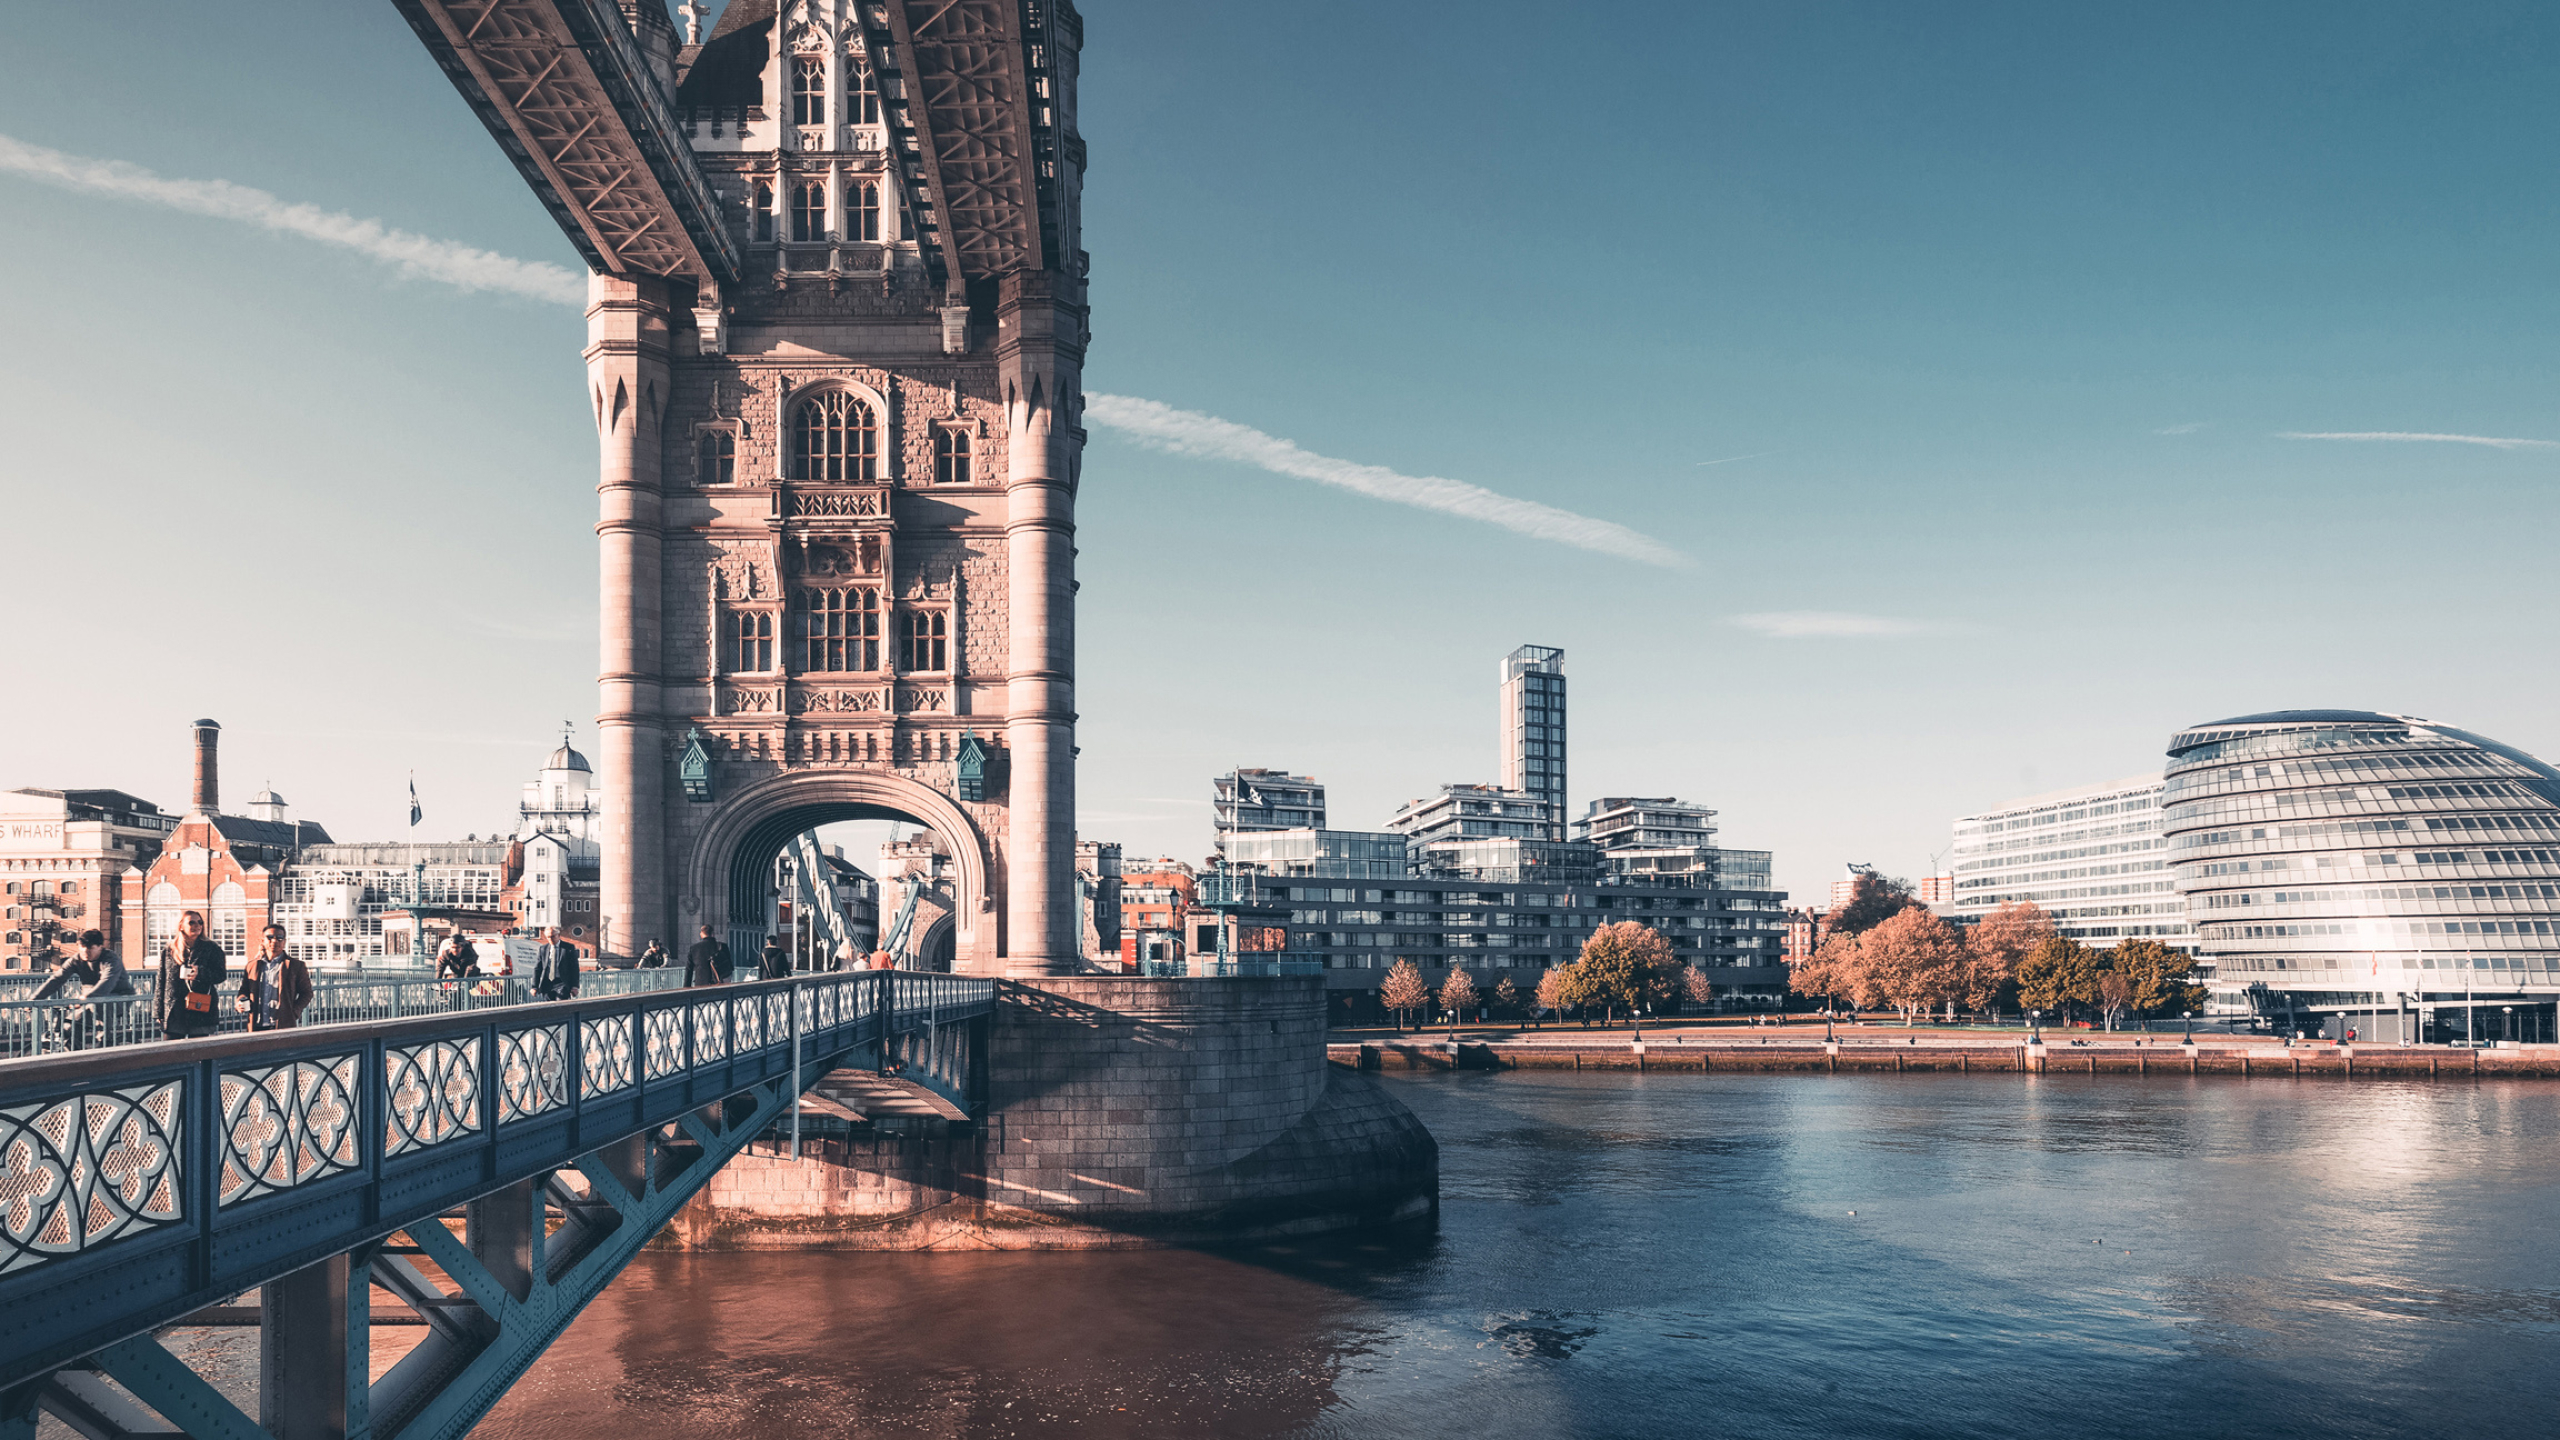 London: The most urbanized area in the United Kingdom. 2560x1440 HD Wallpaper.